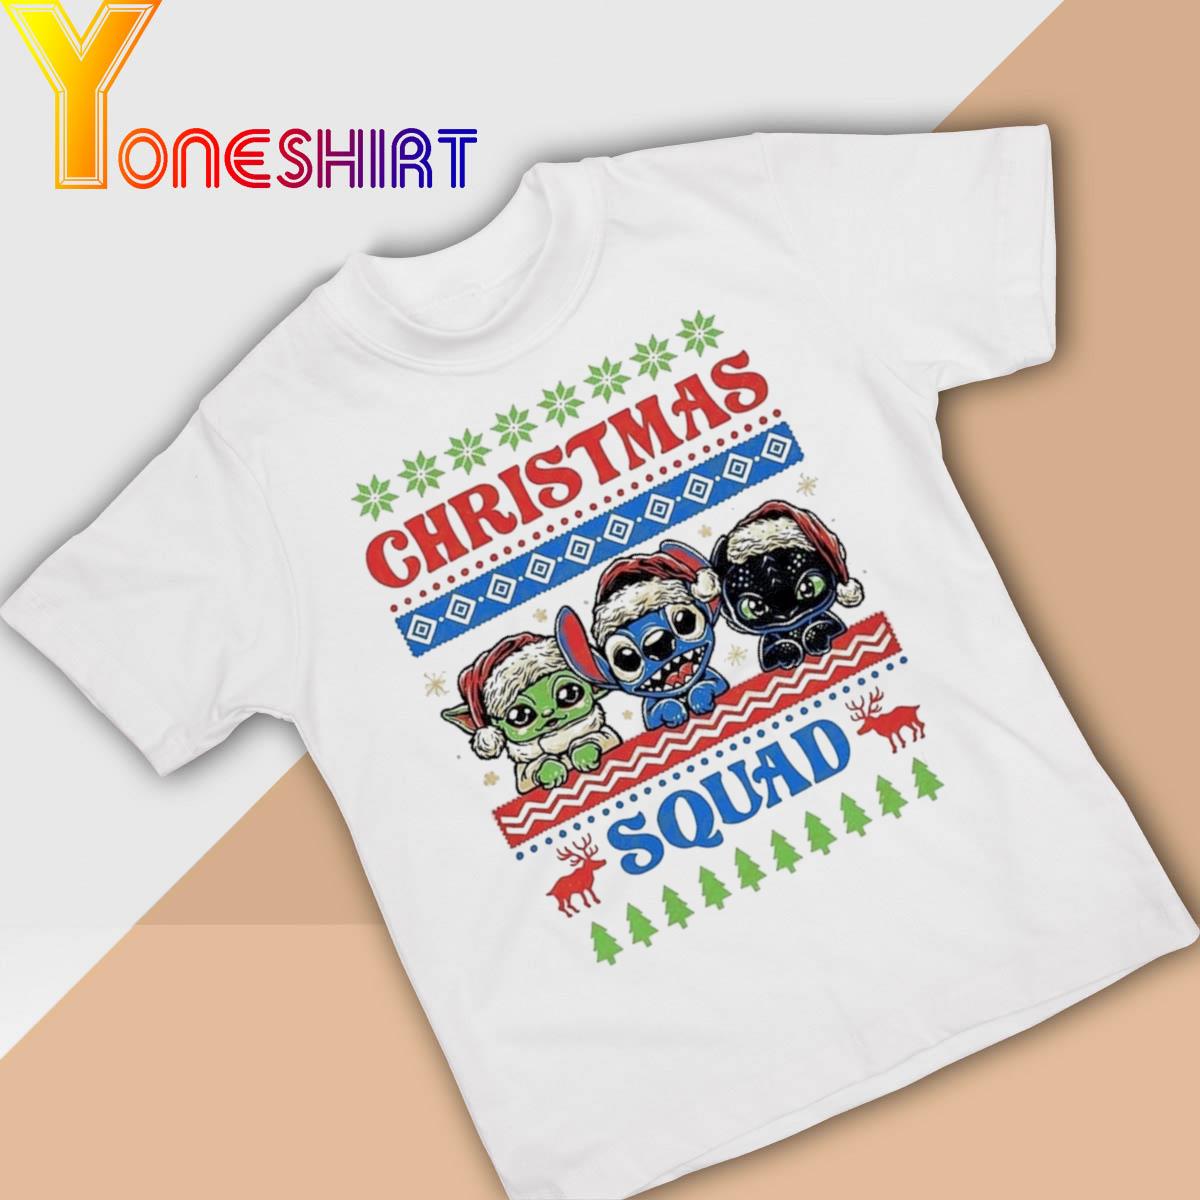 Baby Yoda And Stitch Santa Hat Christmas Squad 2022 sweater